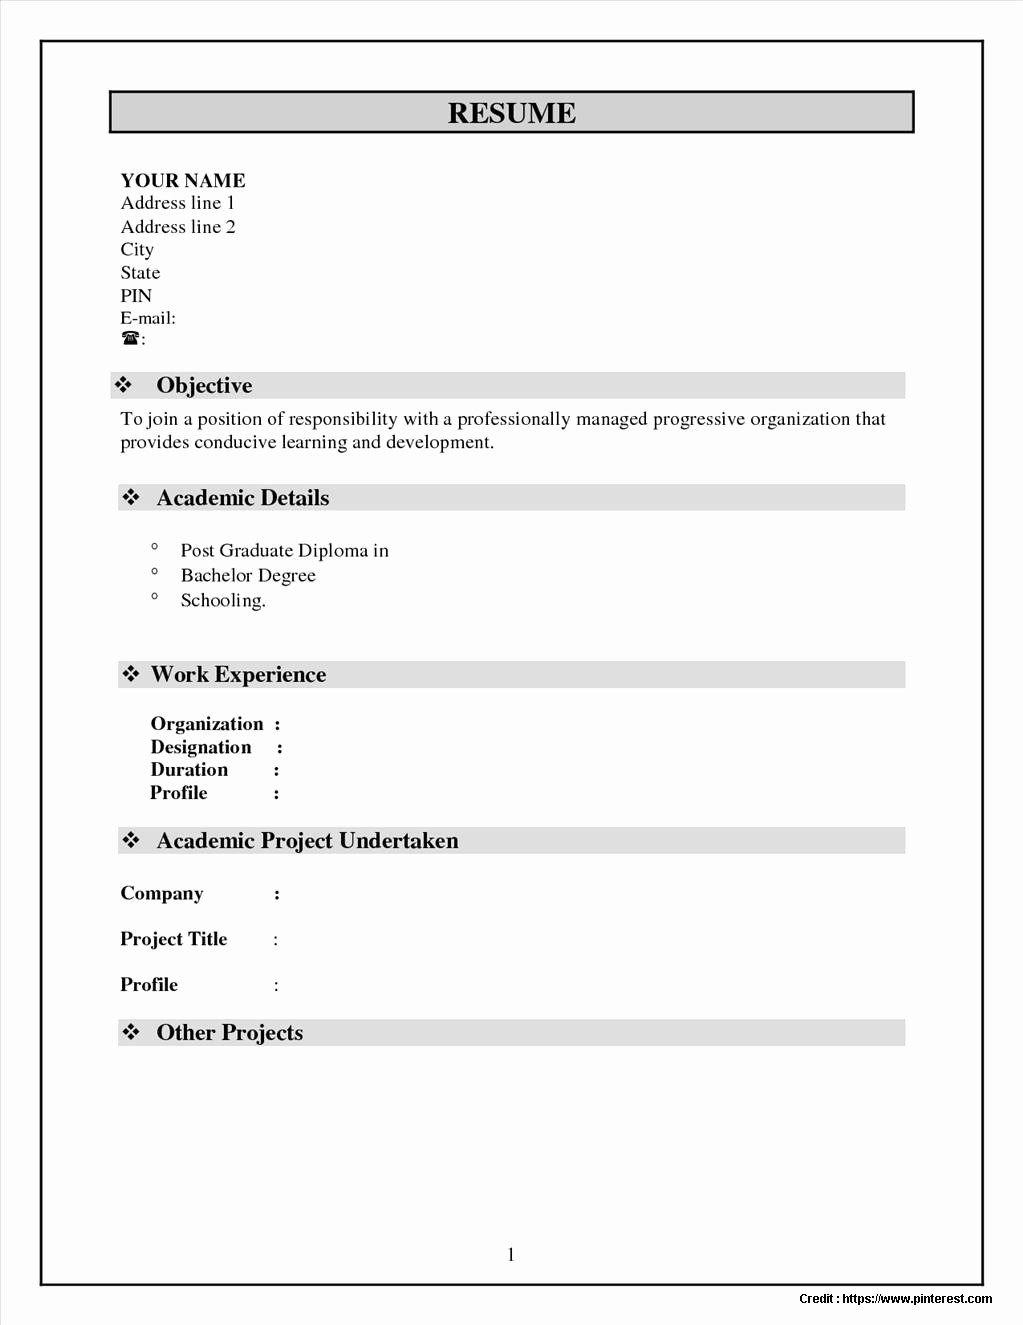 Free Resume Templates Download Pdf Unique Sample Resume format Pdf Download Free Resume Resume